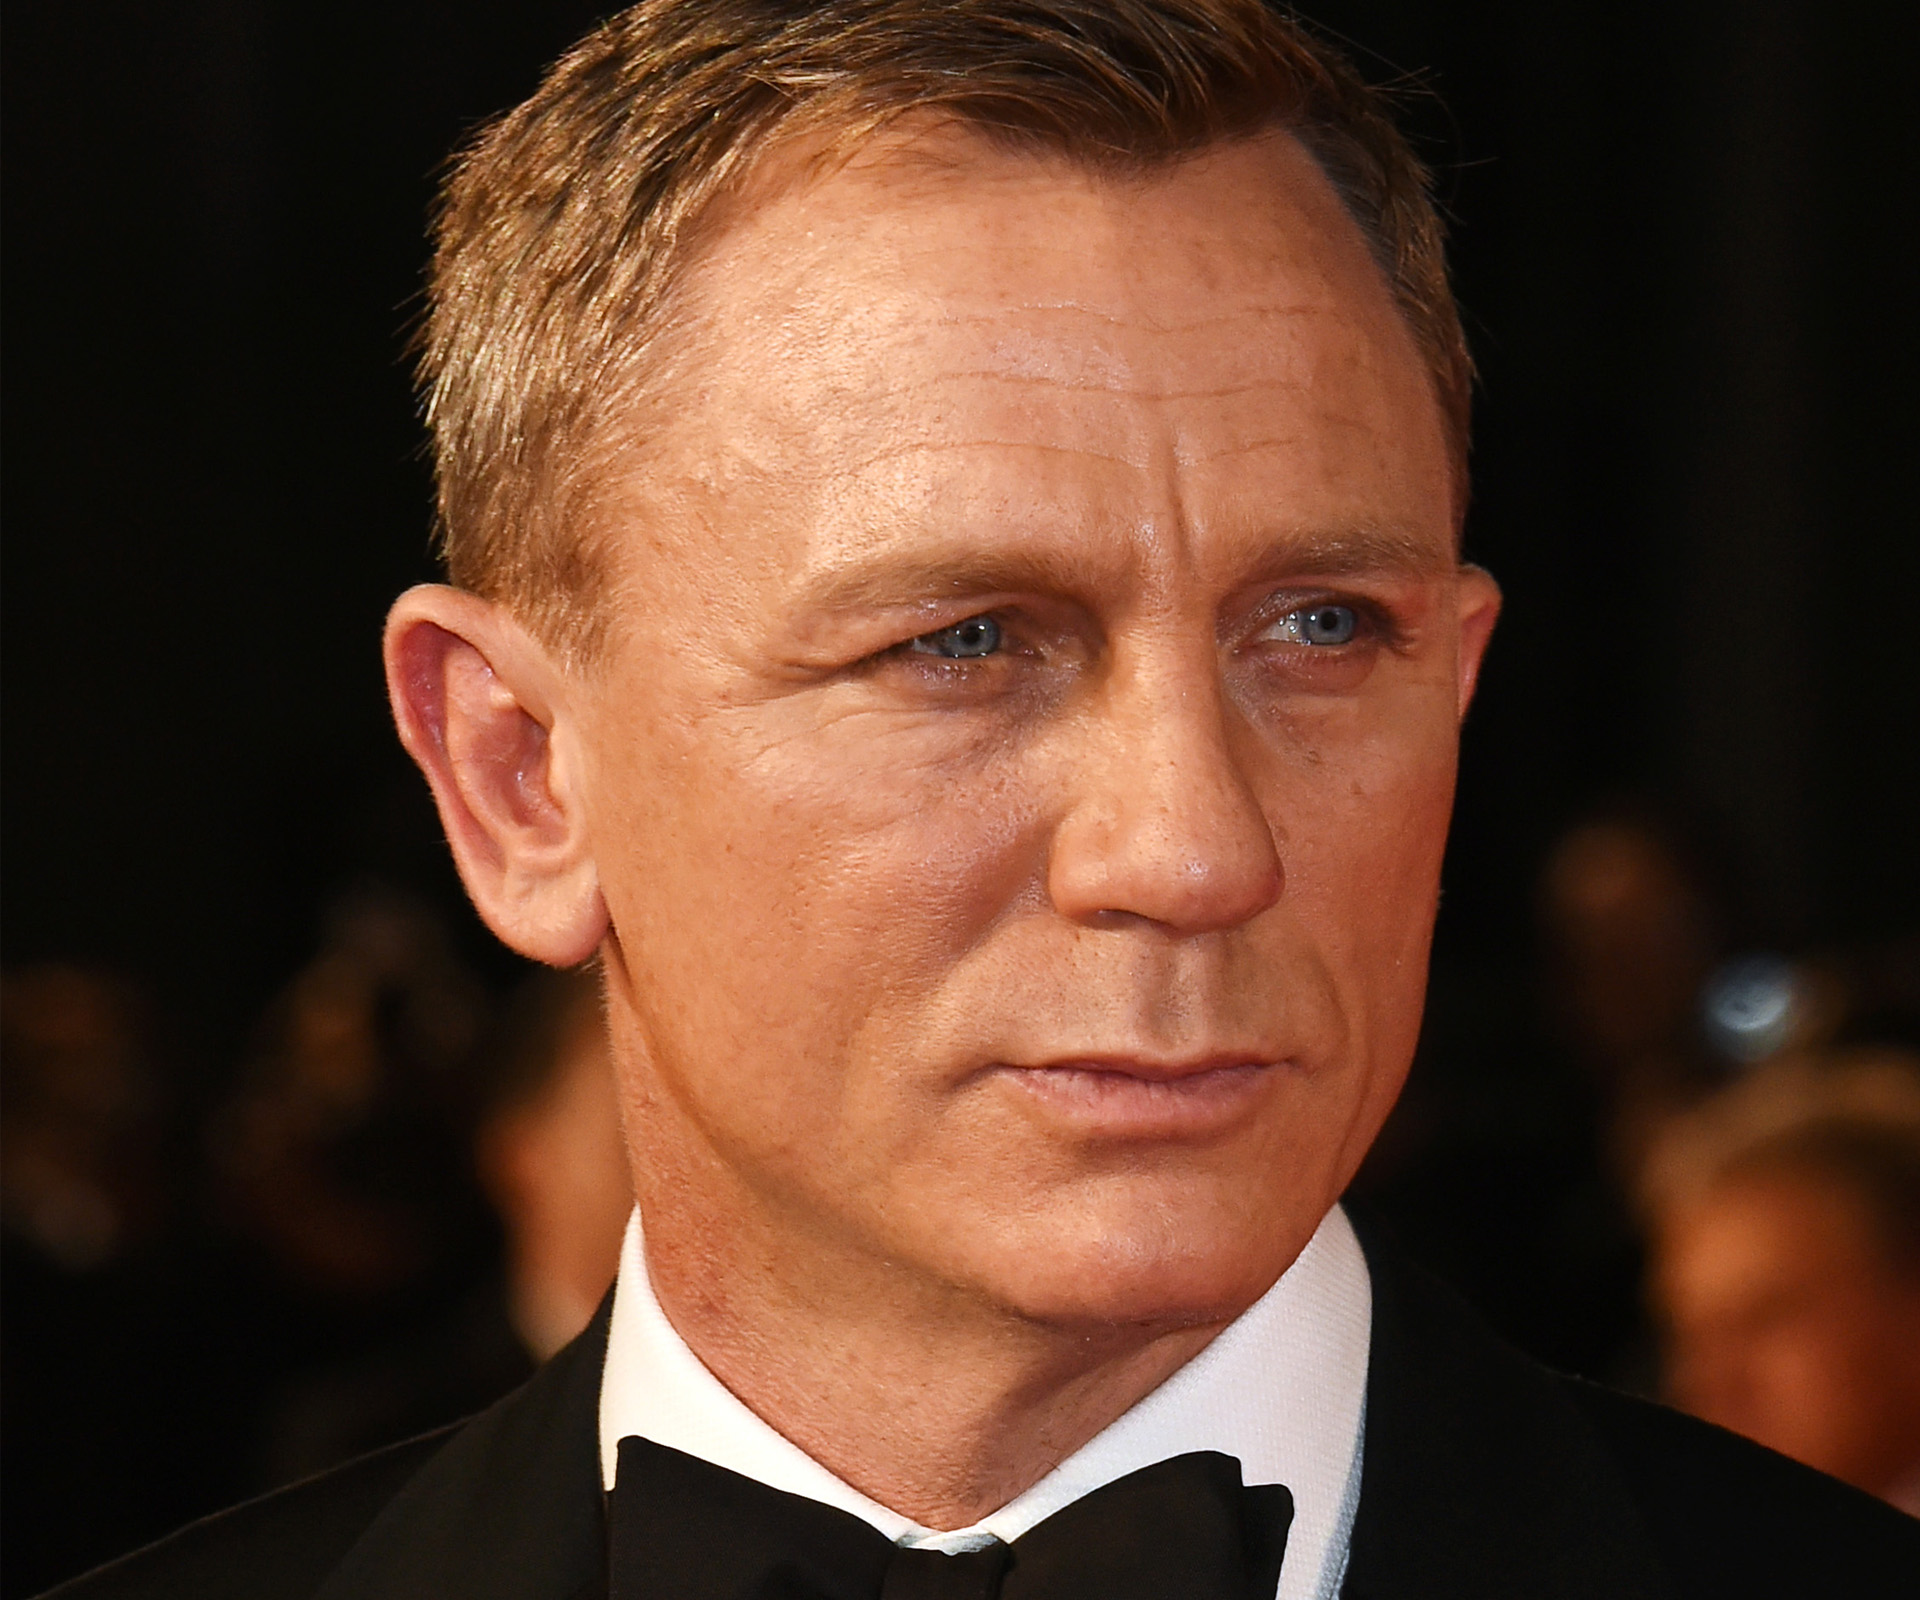 Why is Daniel Craig so miserable?